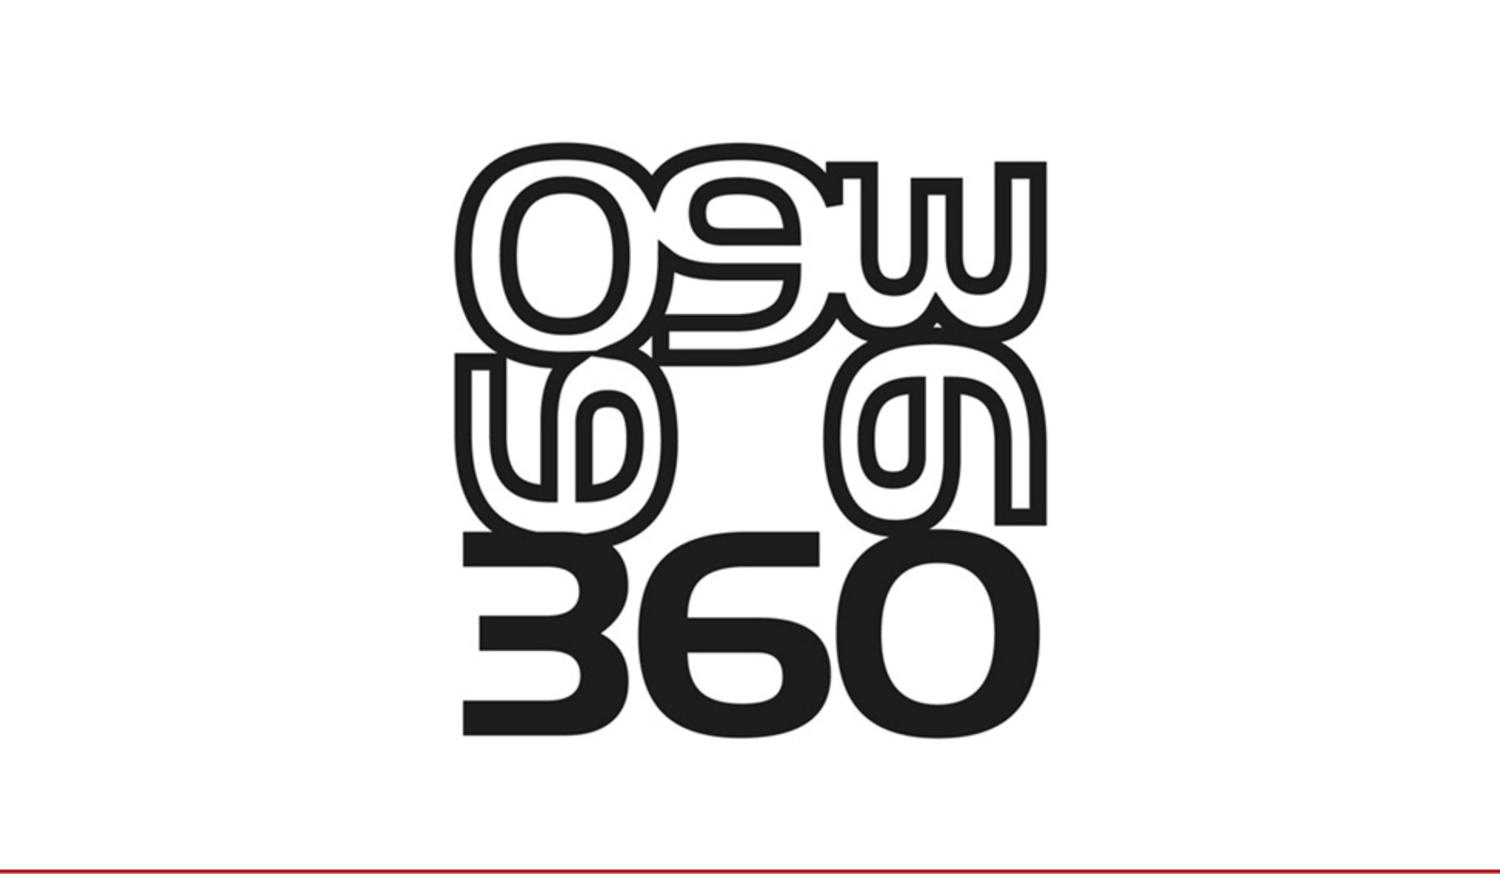 Projekt logo 360 stopni